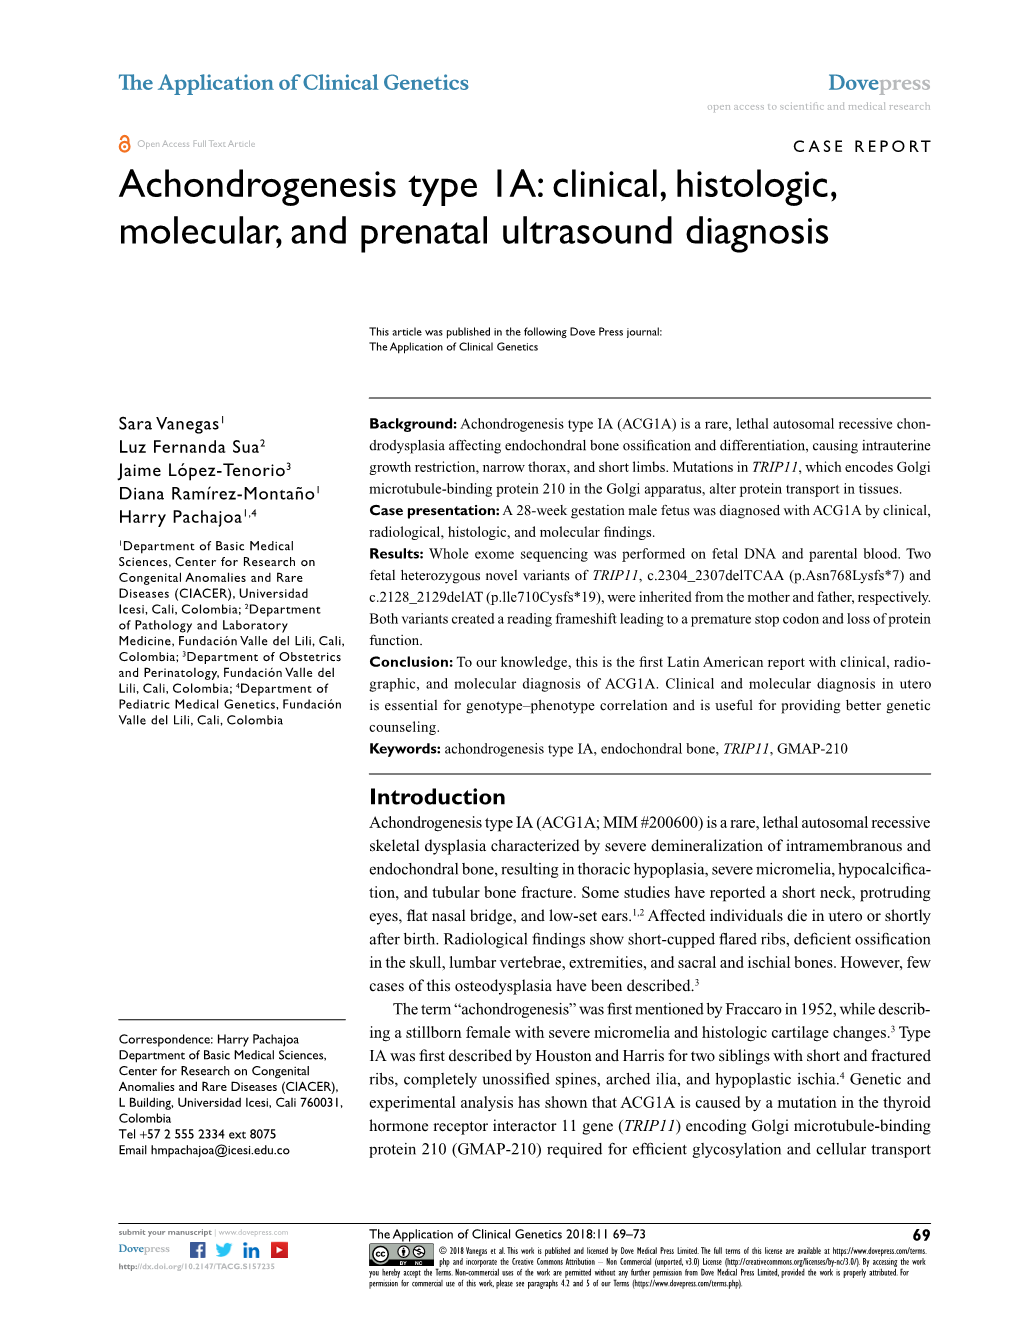 Achondrogenesis Type 1A: Clinical, Histologic, Molecular, and Prenatal Ultrasound Diagnosis